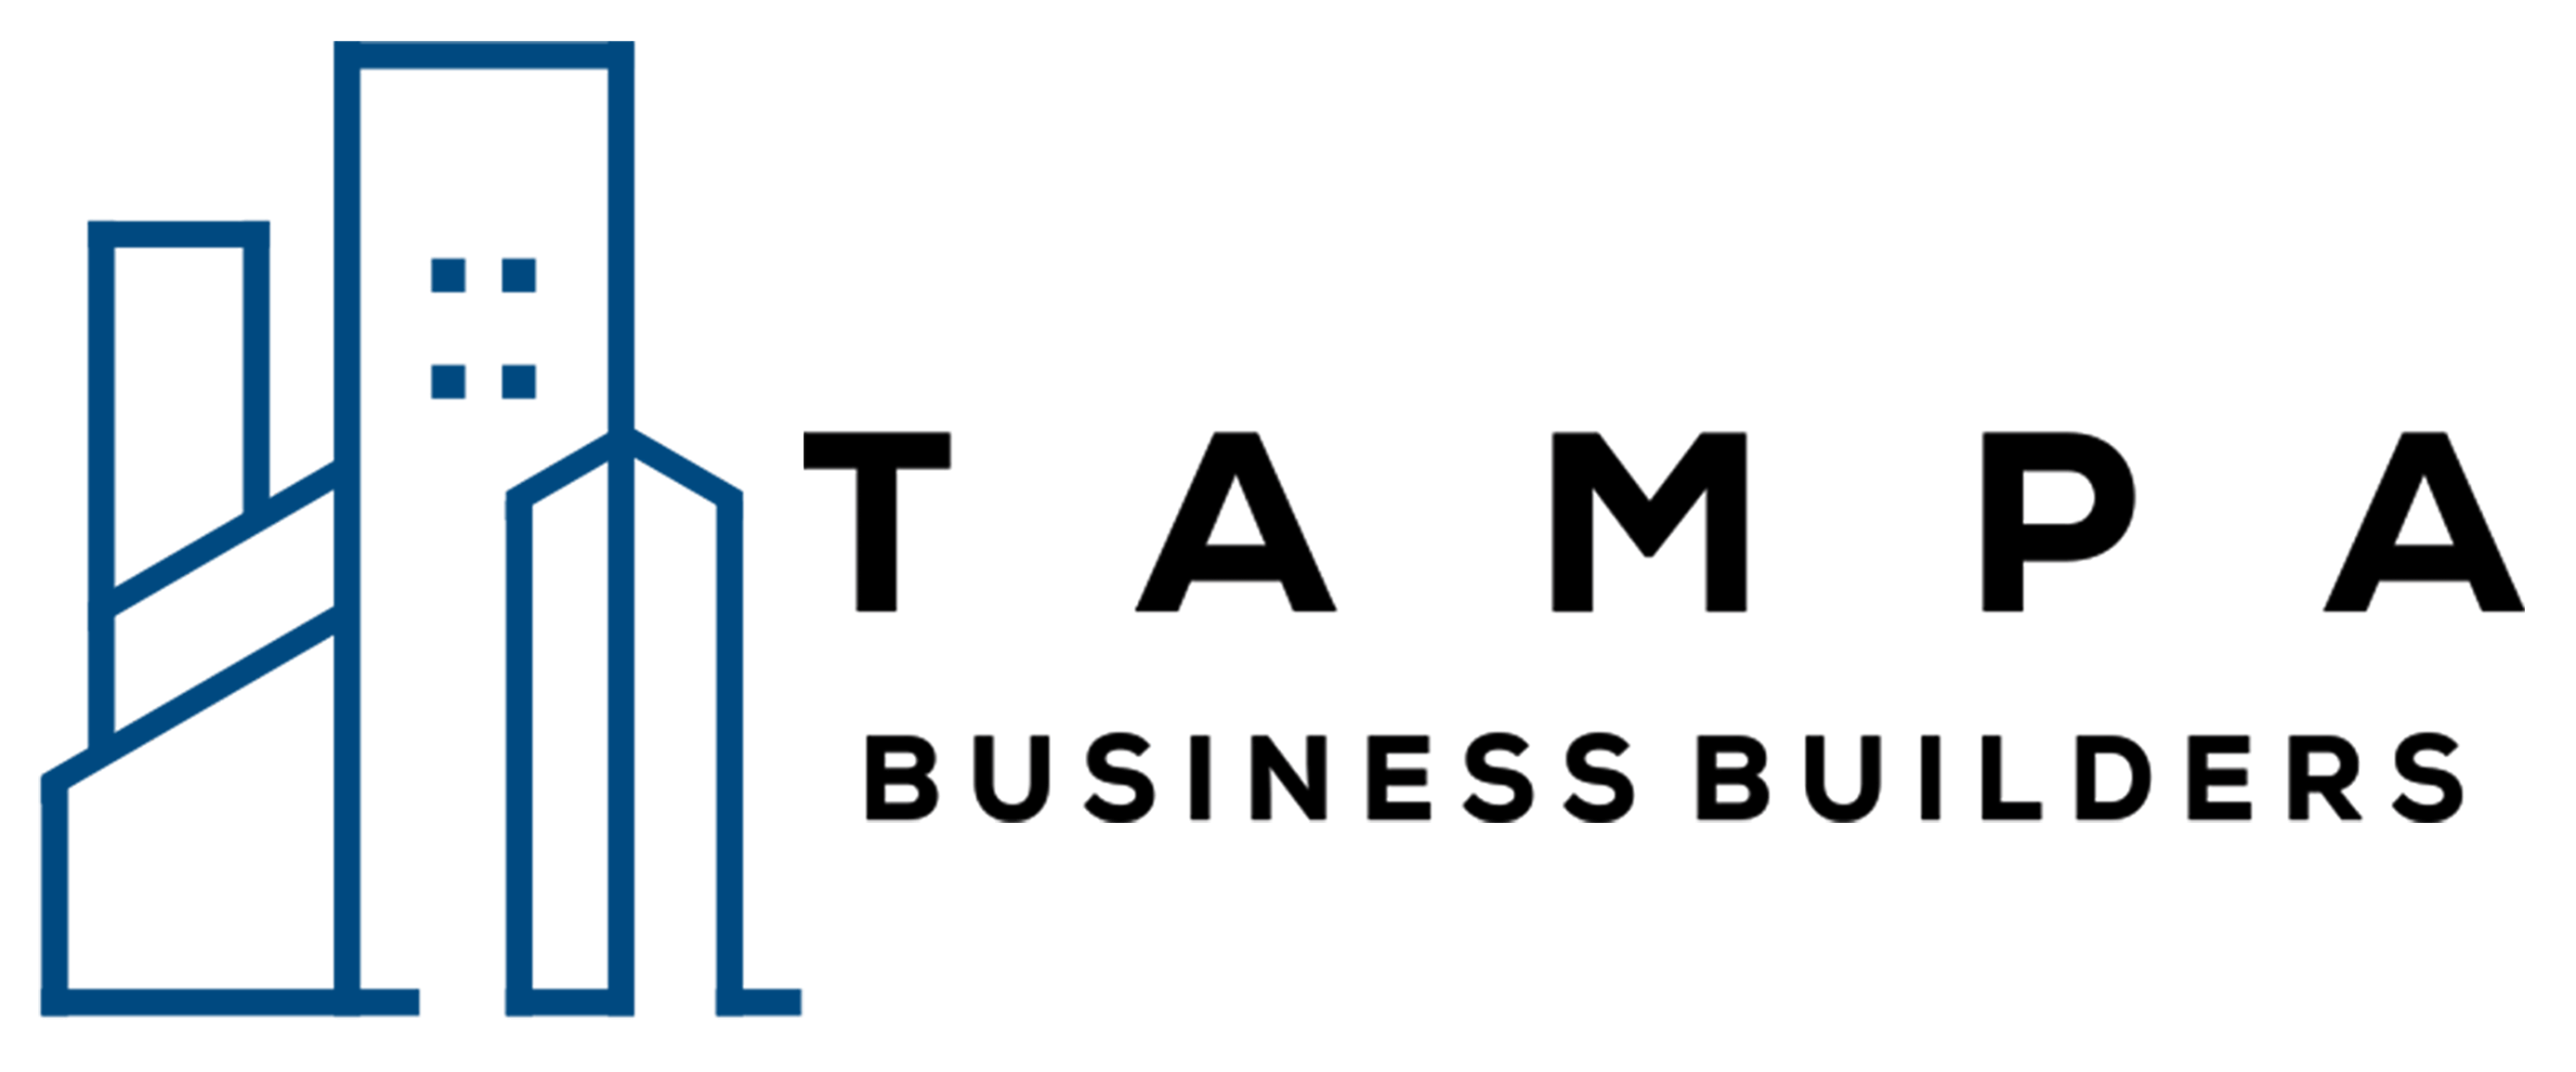 tampa business builder logo